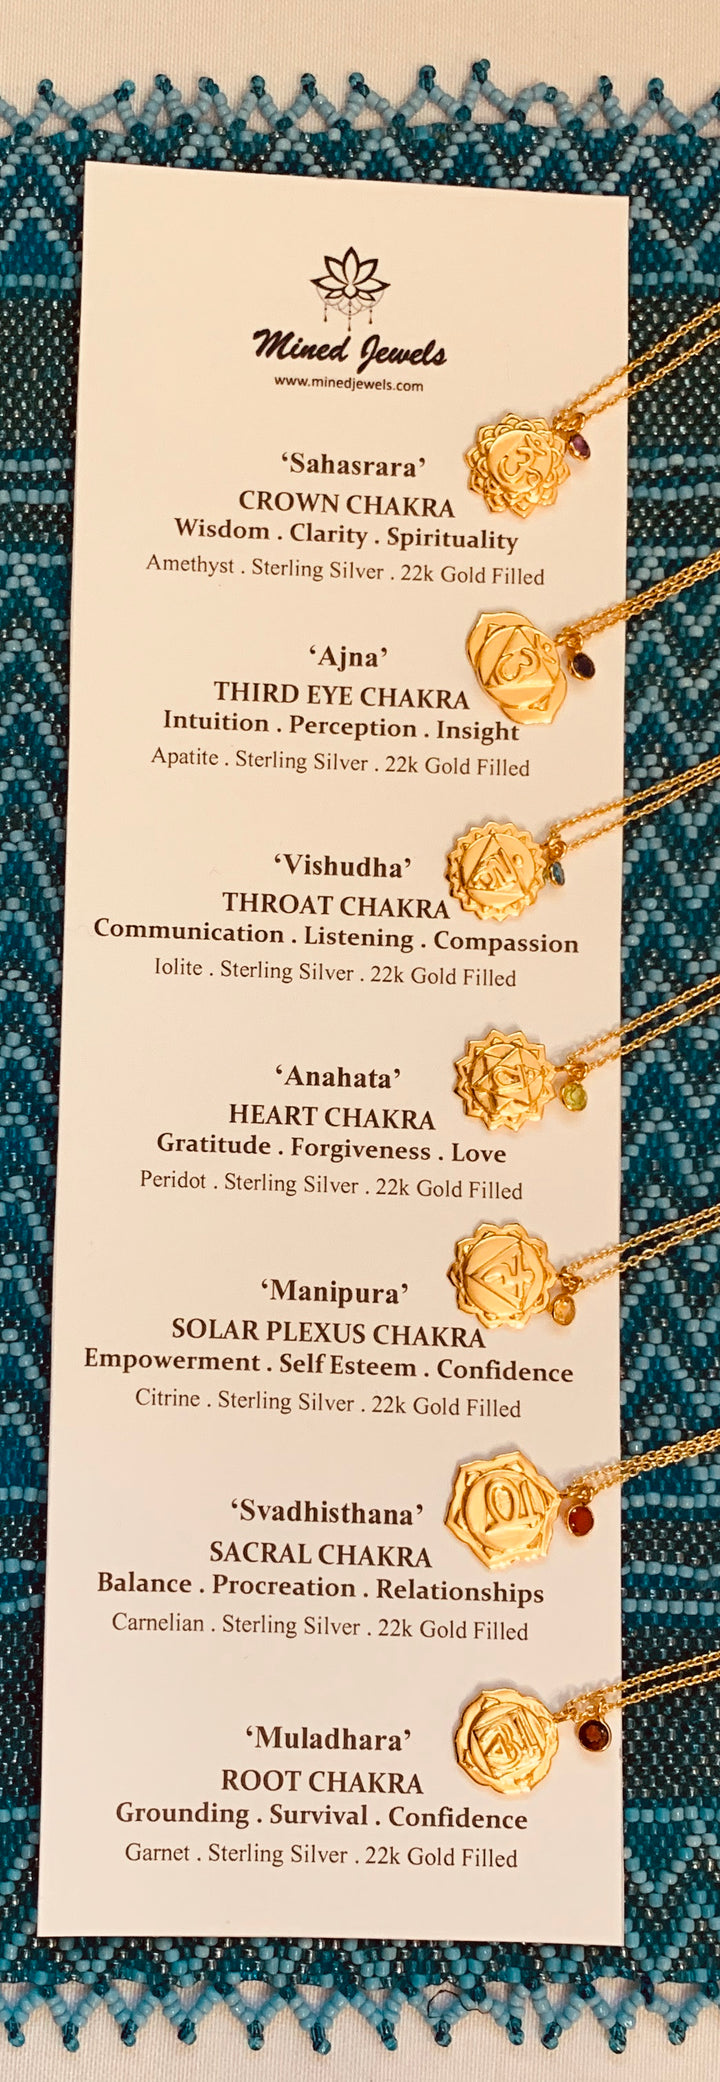 Sacral Chakra, Svadhisthana- Carnelian Charm, (Balance:Procreation:Relationships) Sterling Silver Gold vermeil